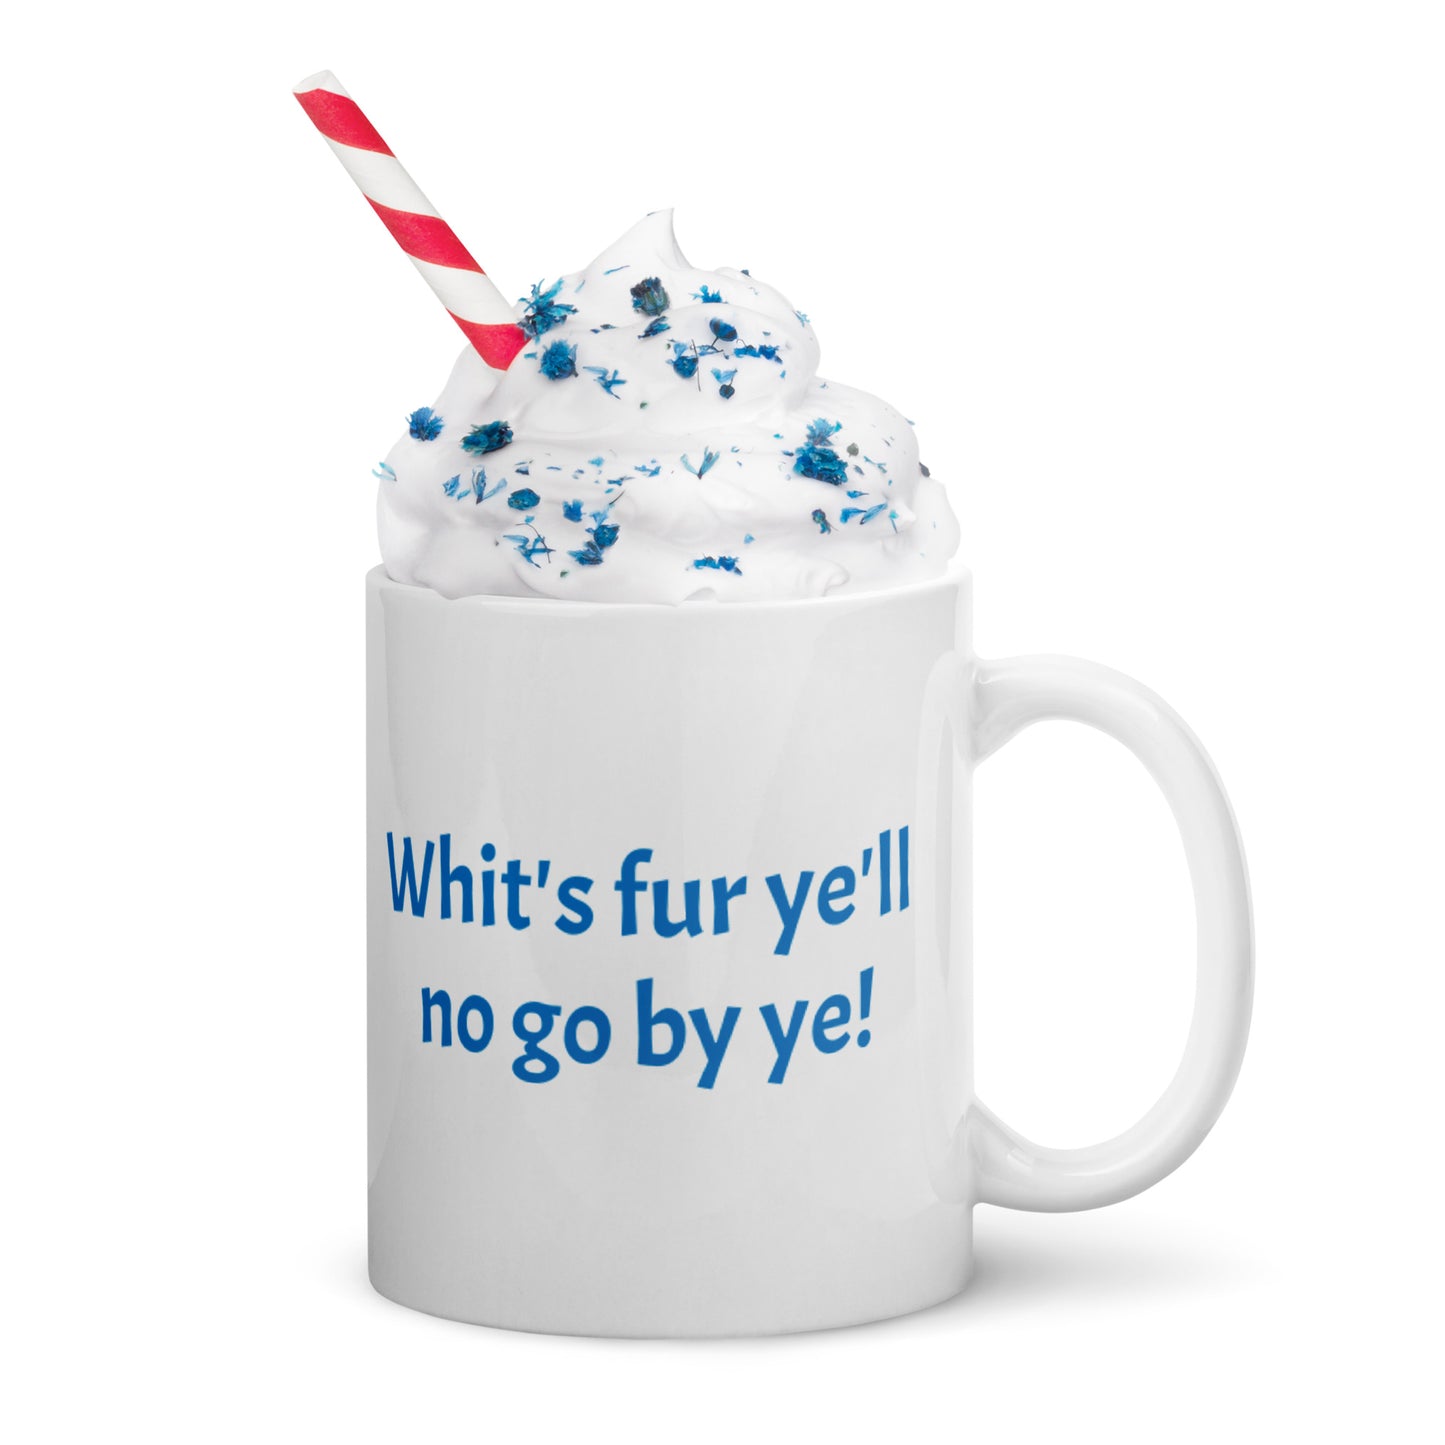 Whit's fur ye'll no go by ye!  -- white glossy mug